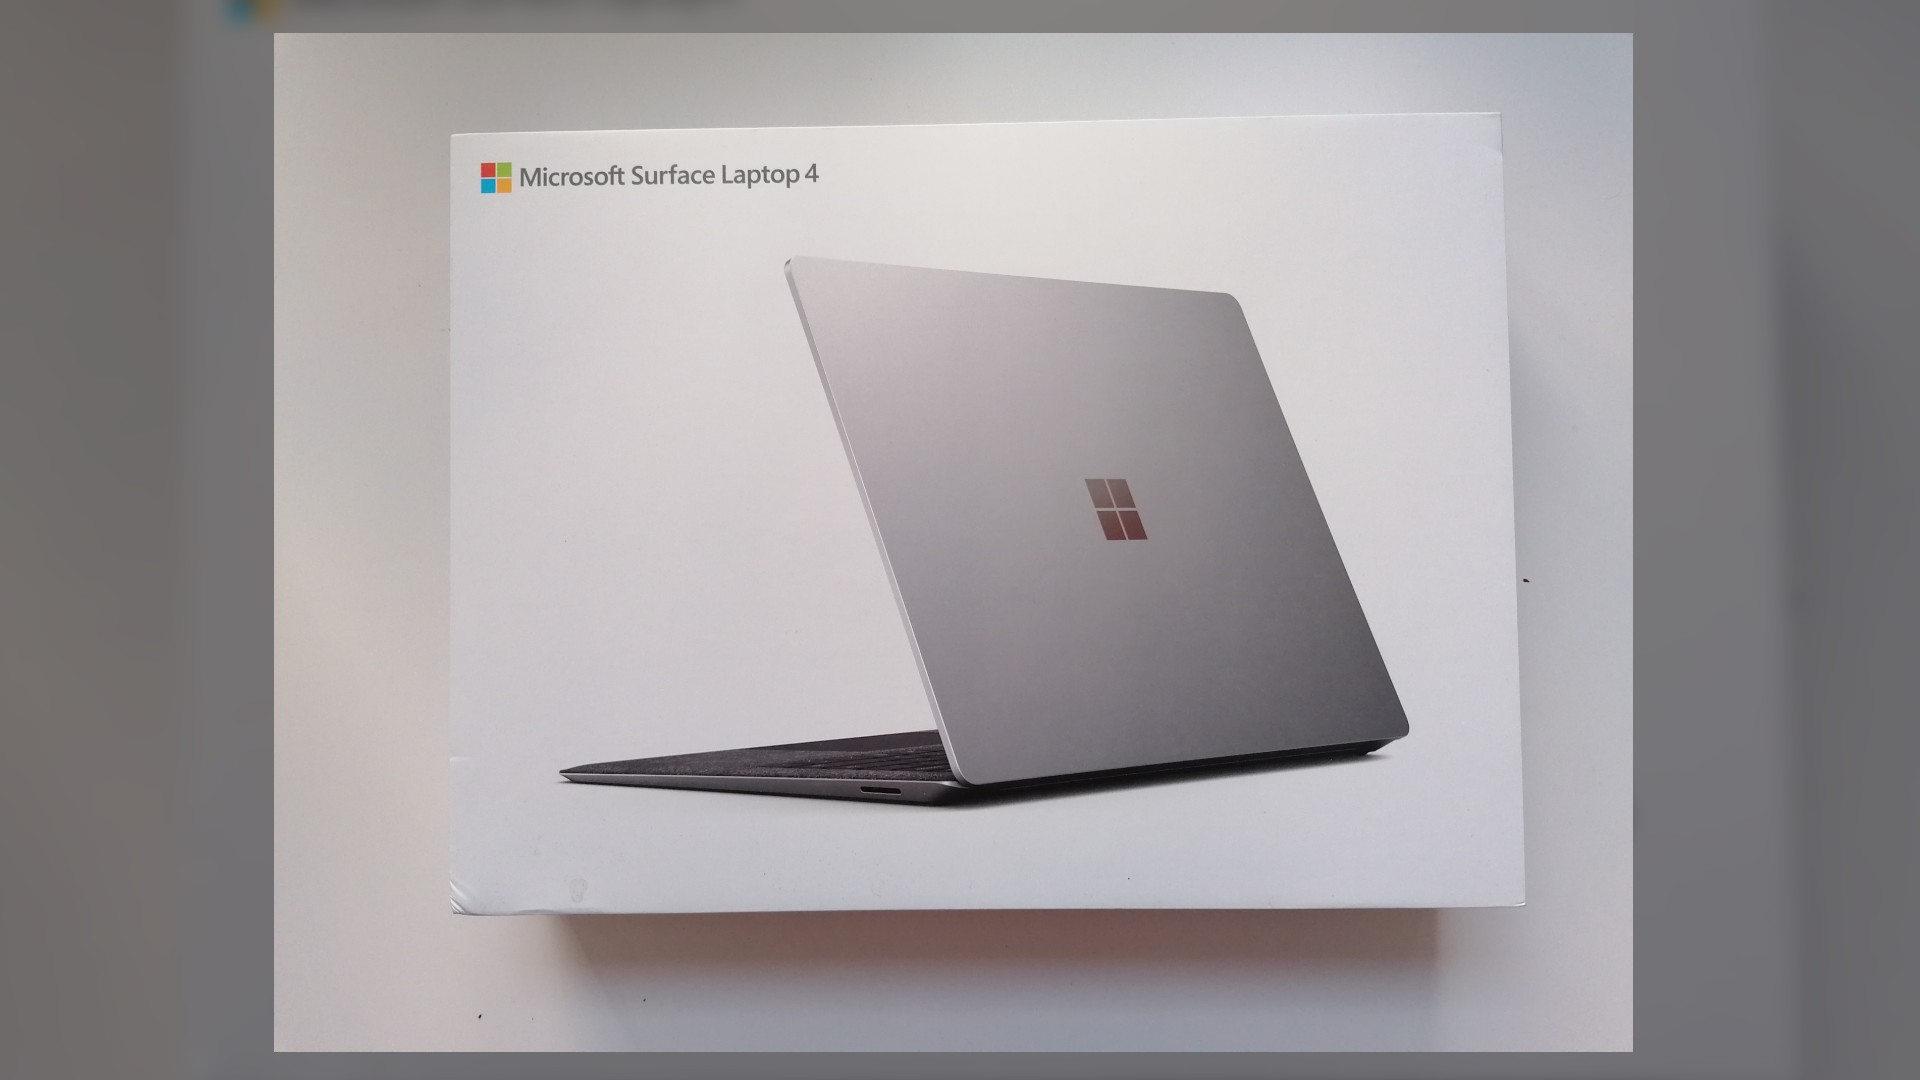 Microsoft Surface Laptop 4 box_Mina Frost